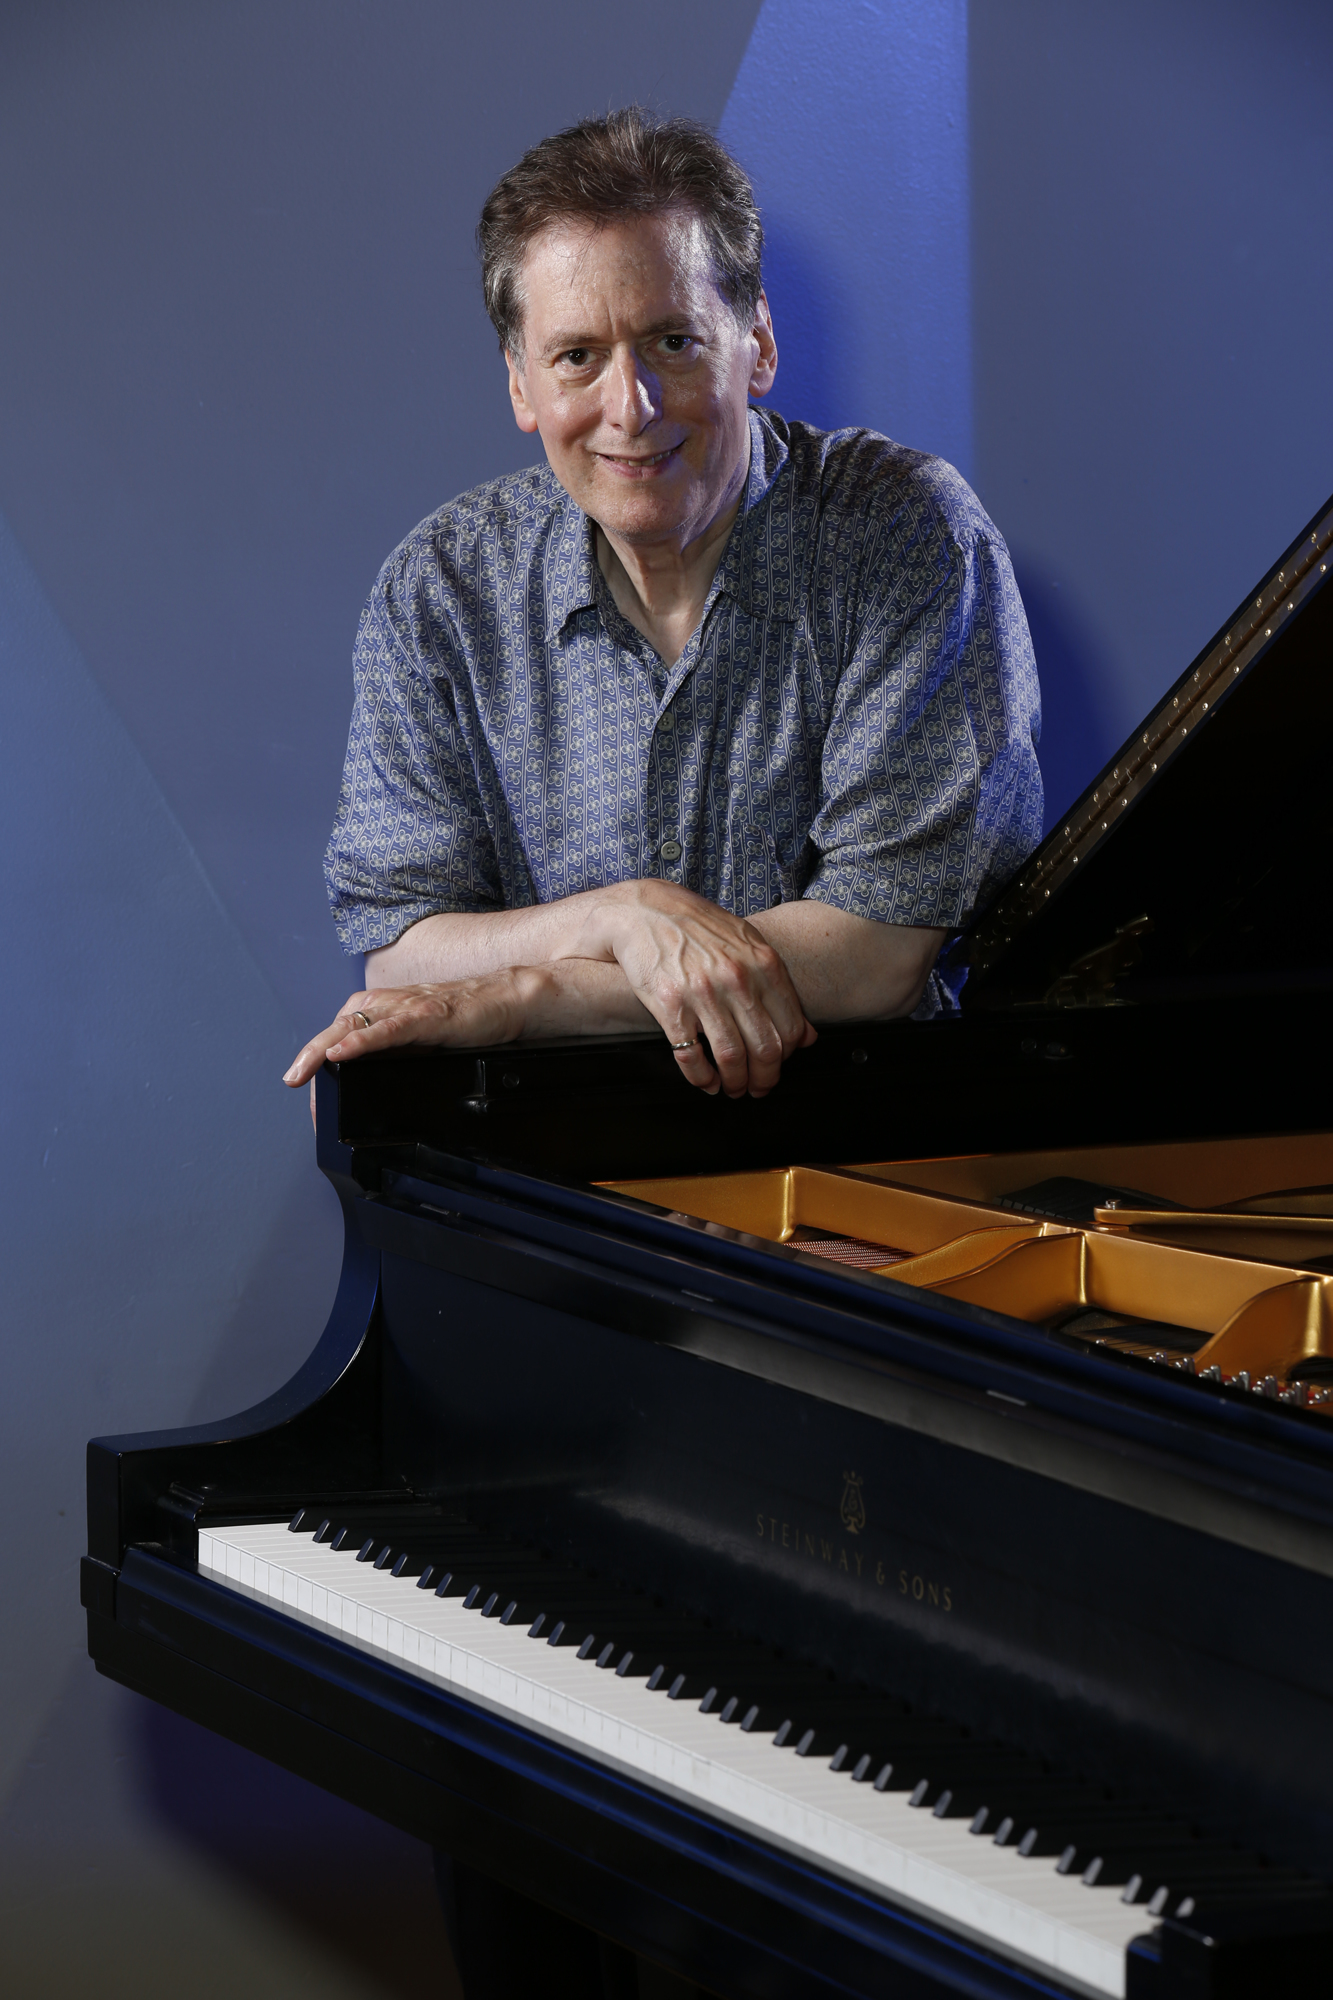 Robert Levin, past Sarasota Music Festival director, performed in 